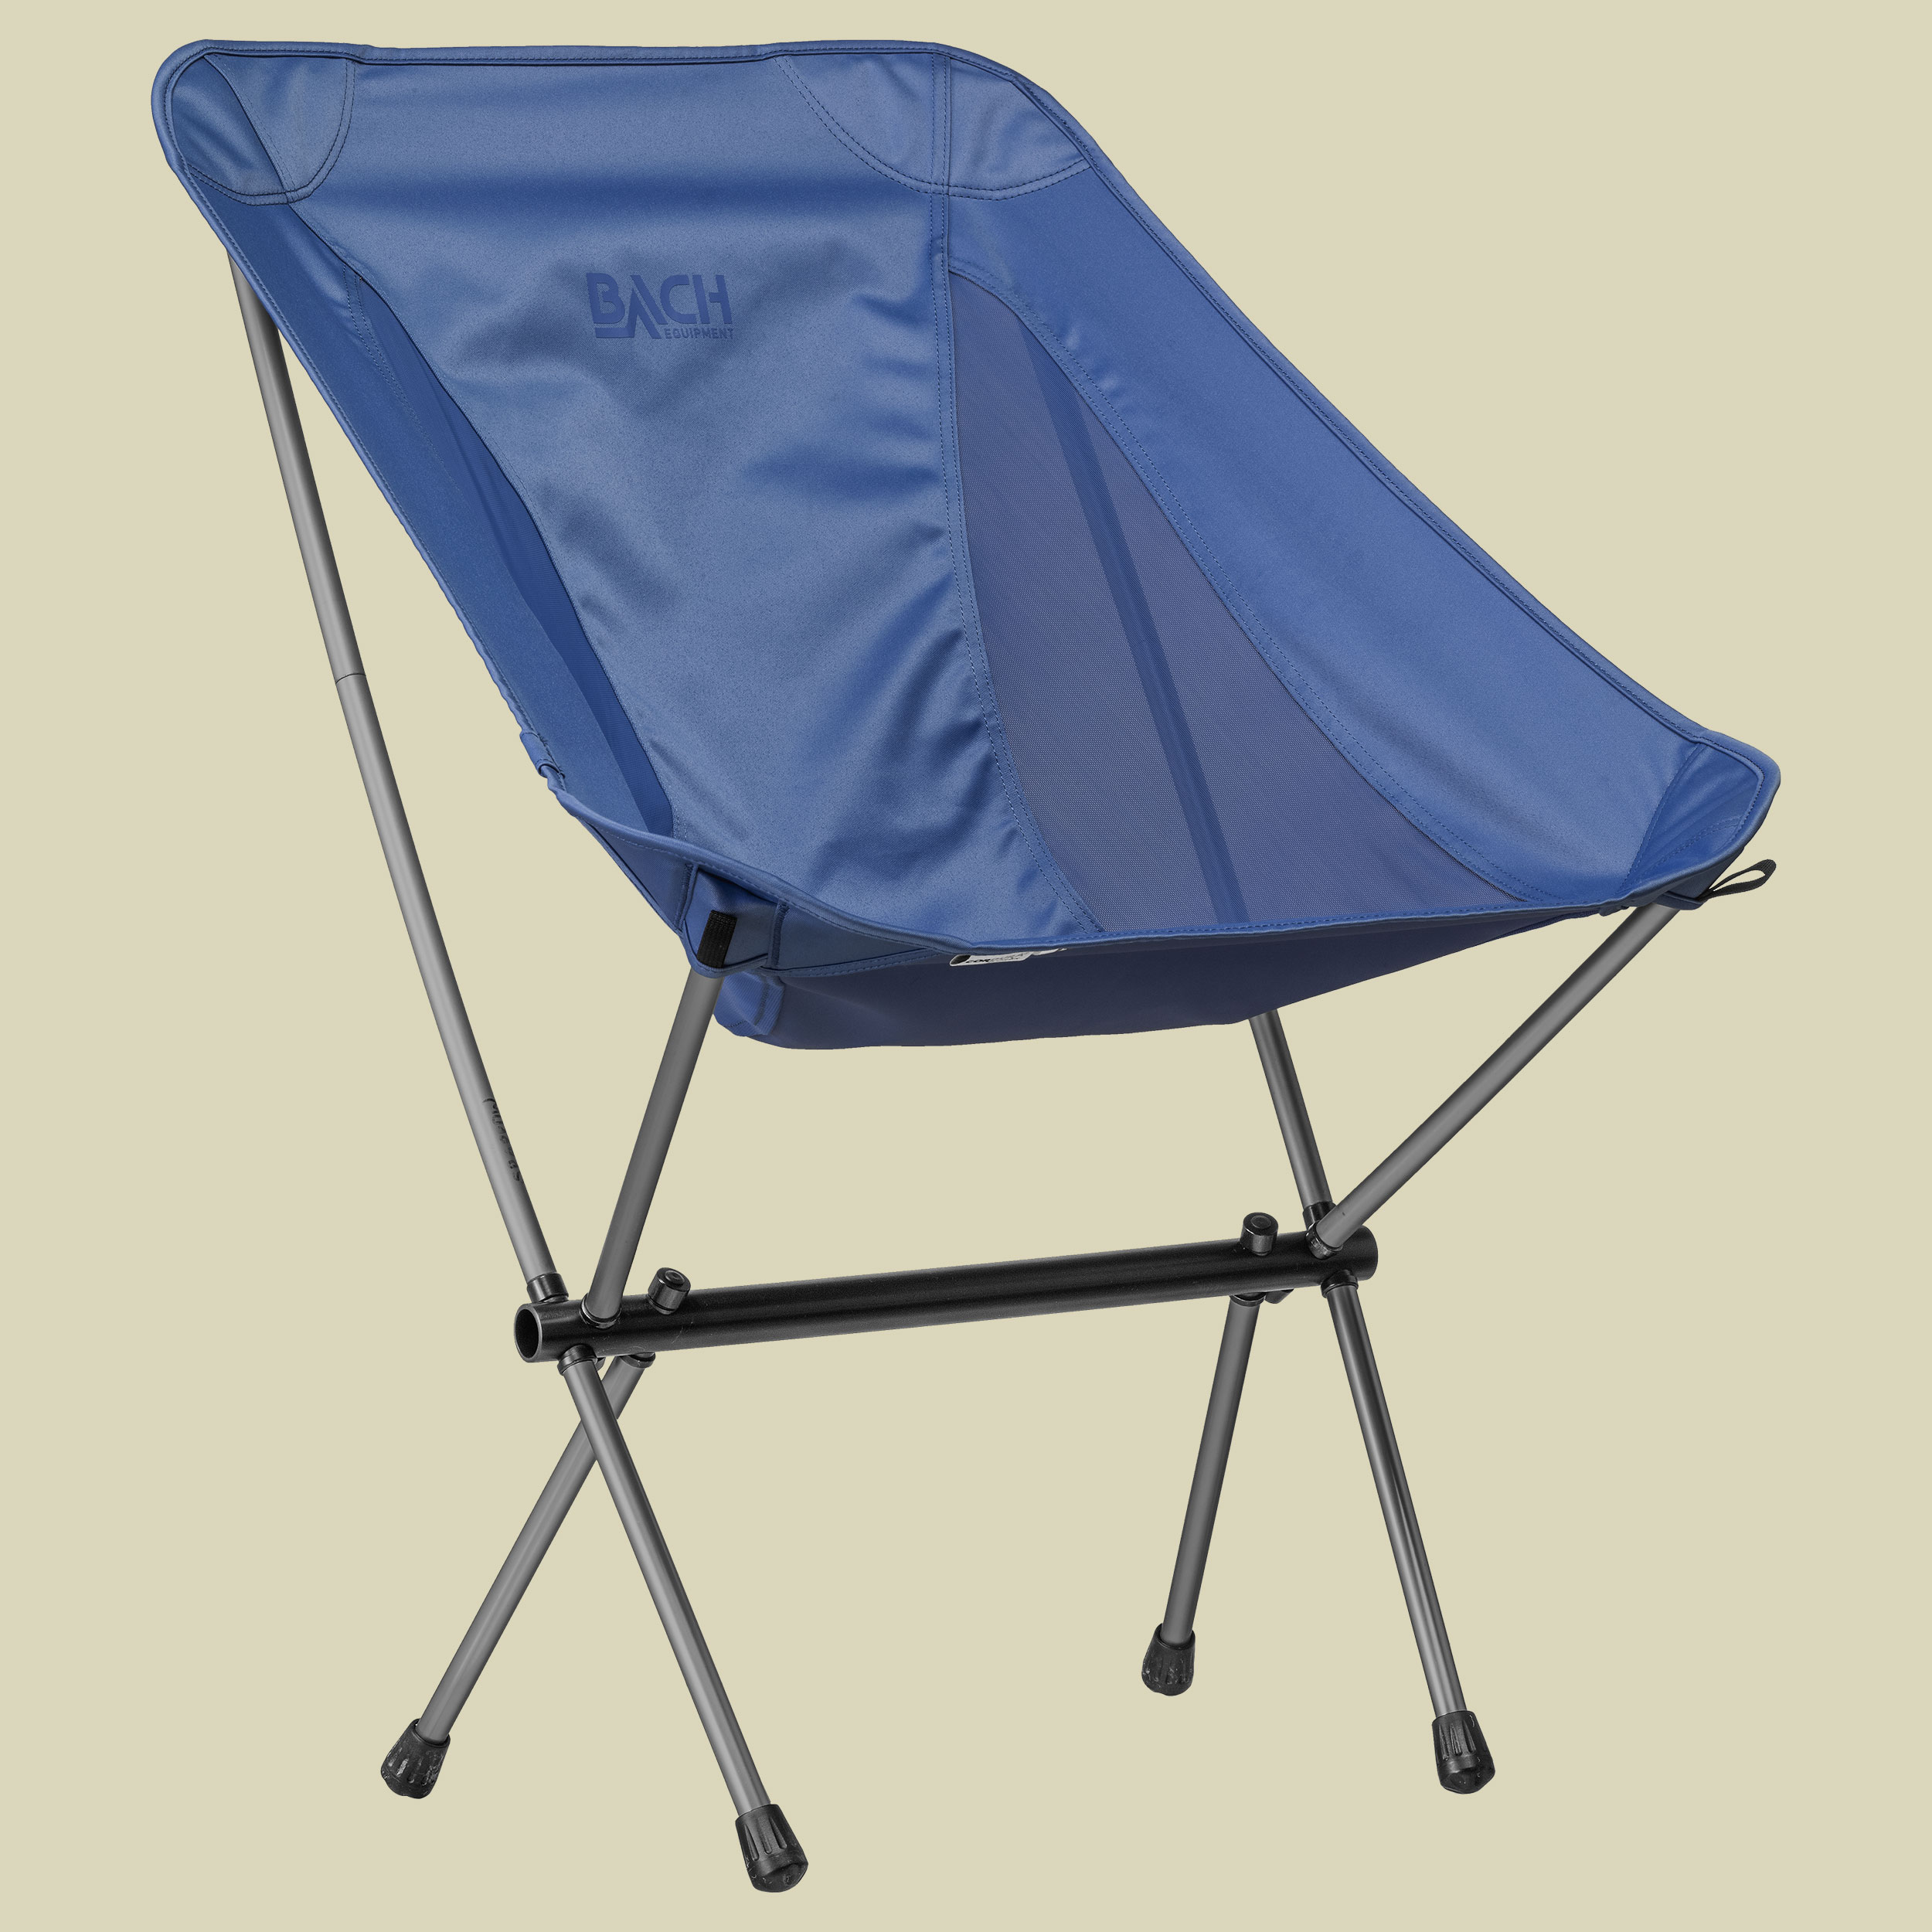 Chair Kiwi Größe one size Farbe riviera blue